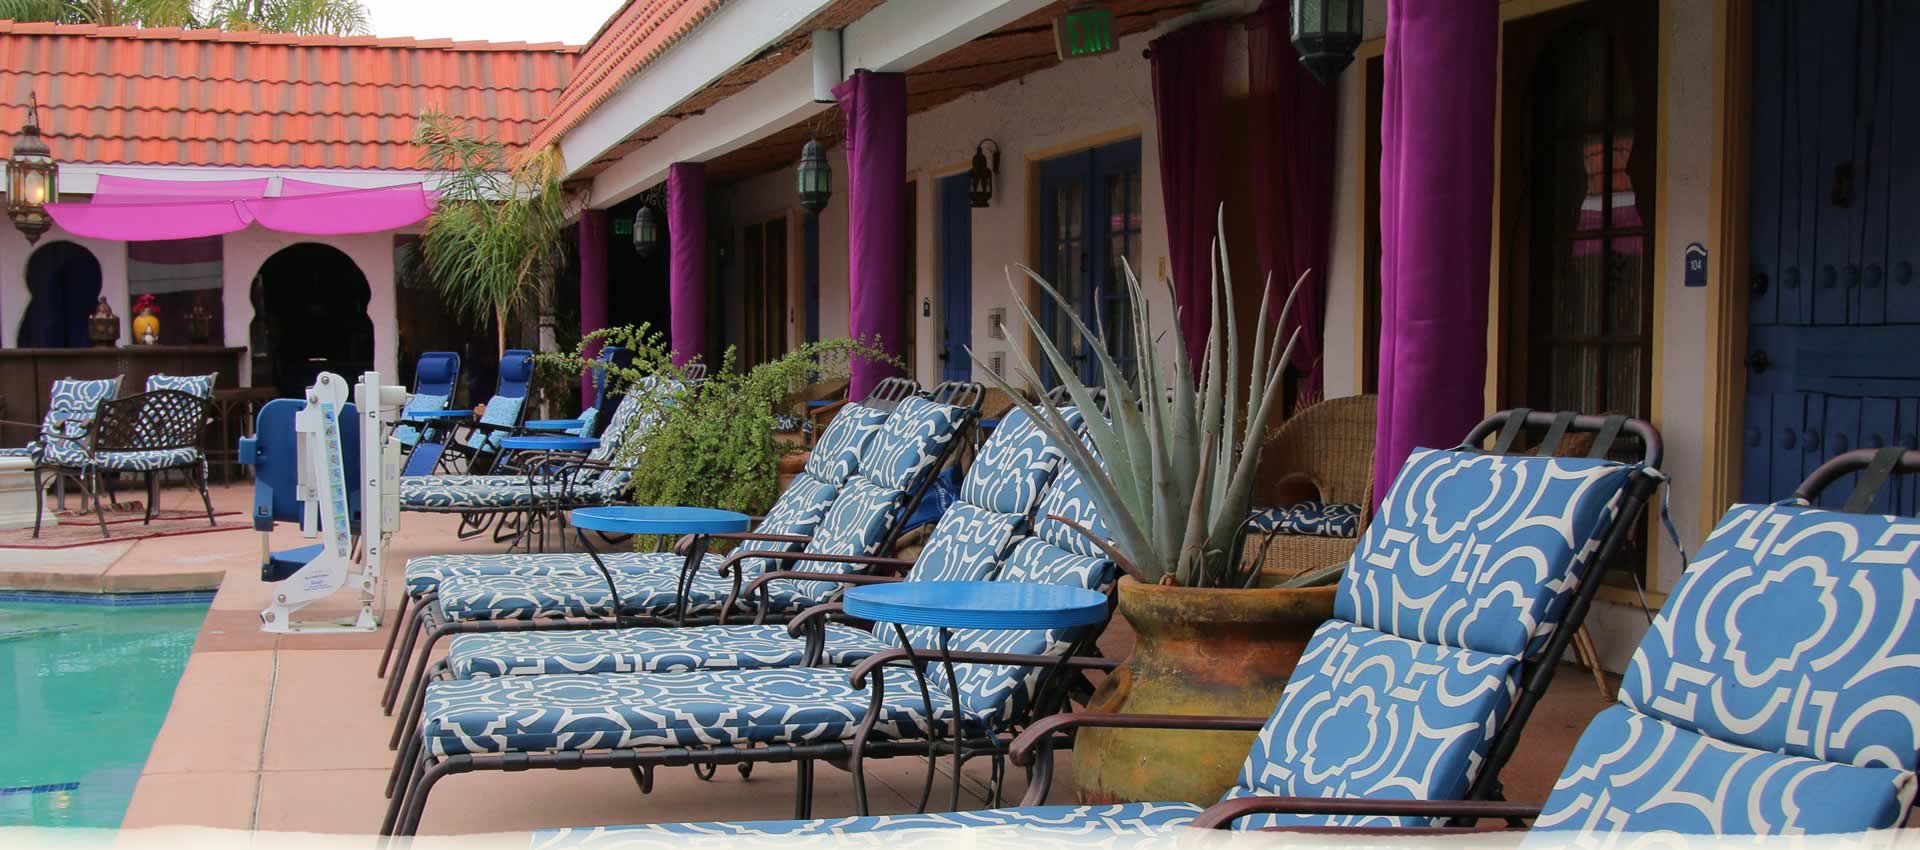 El Morocco Inn pool lounge chairs by pool